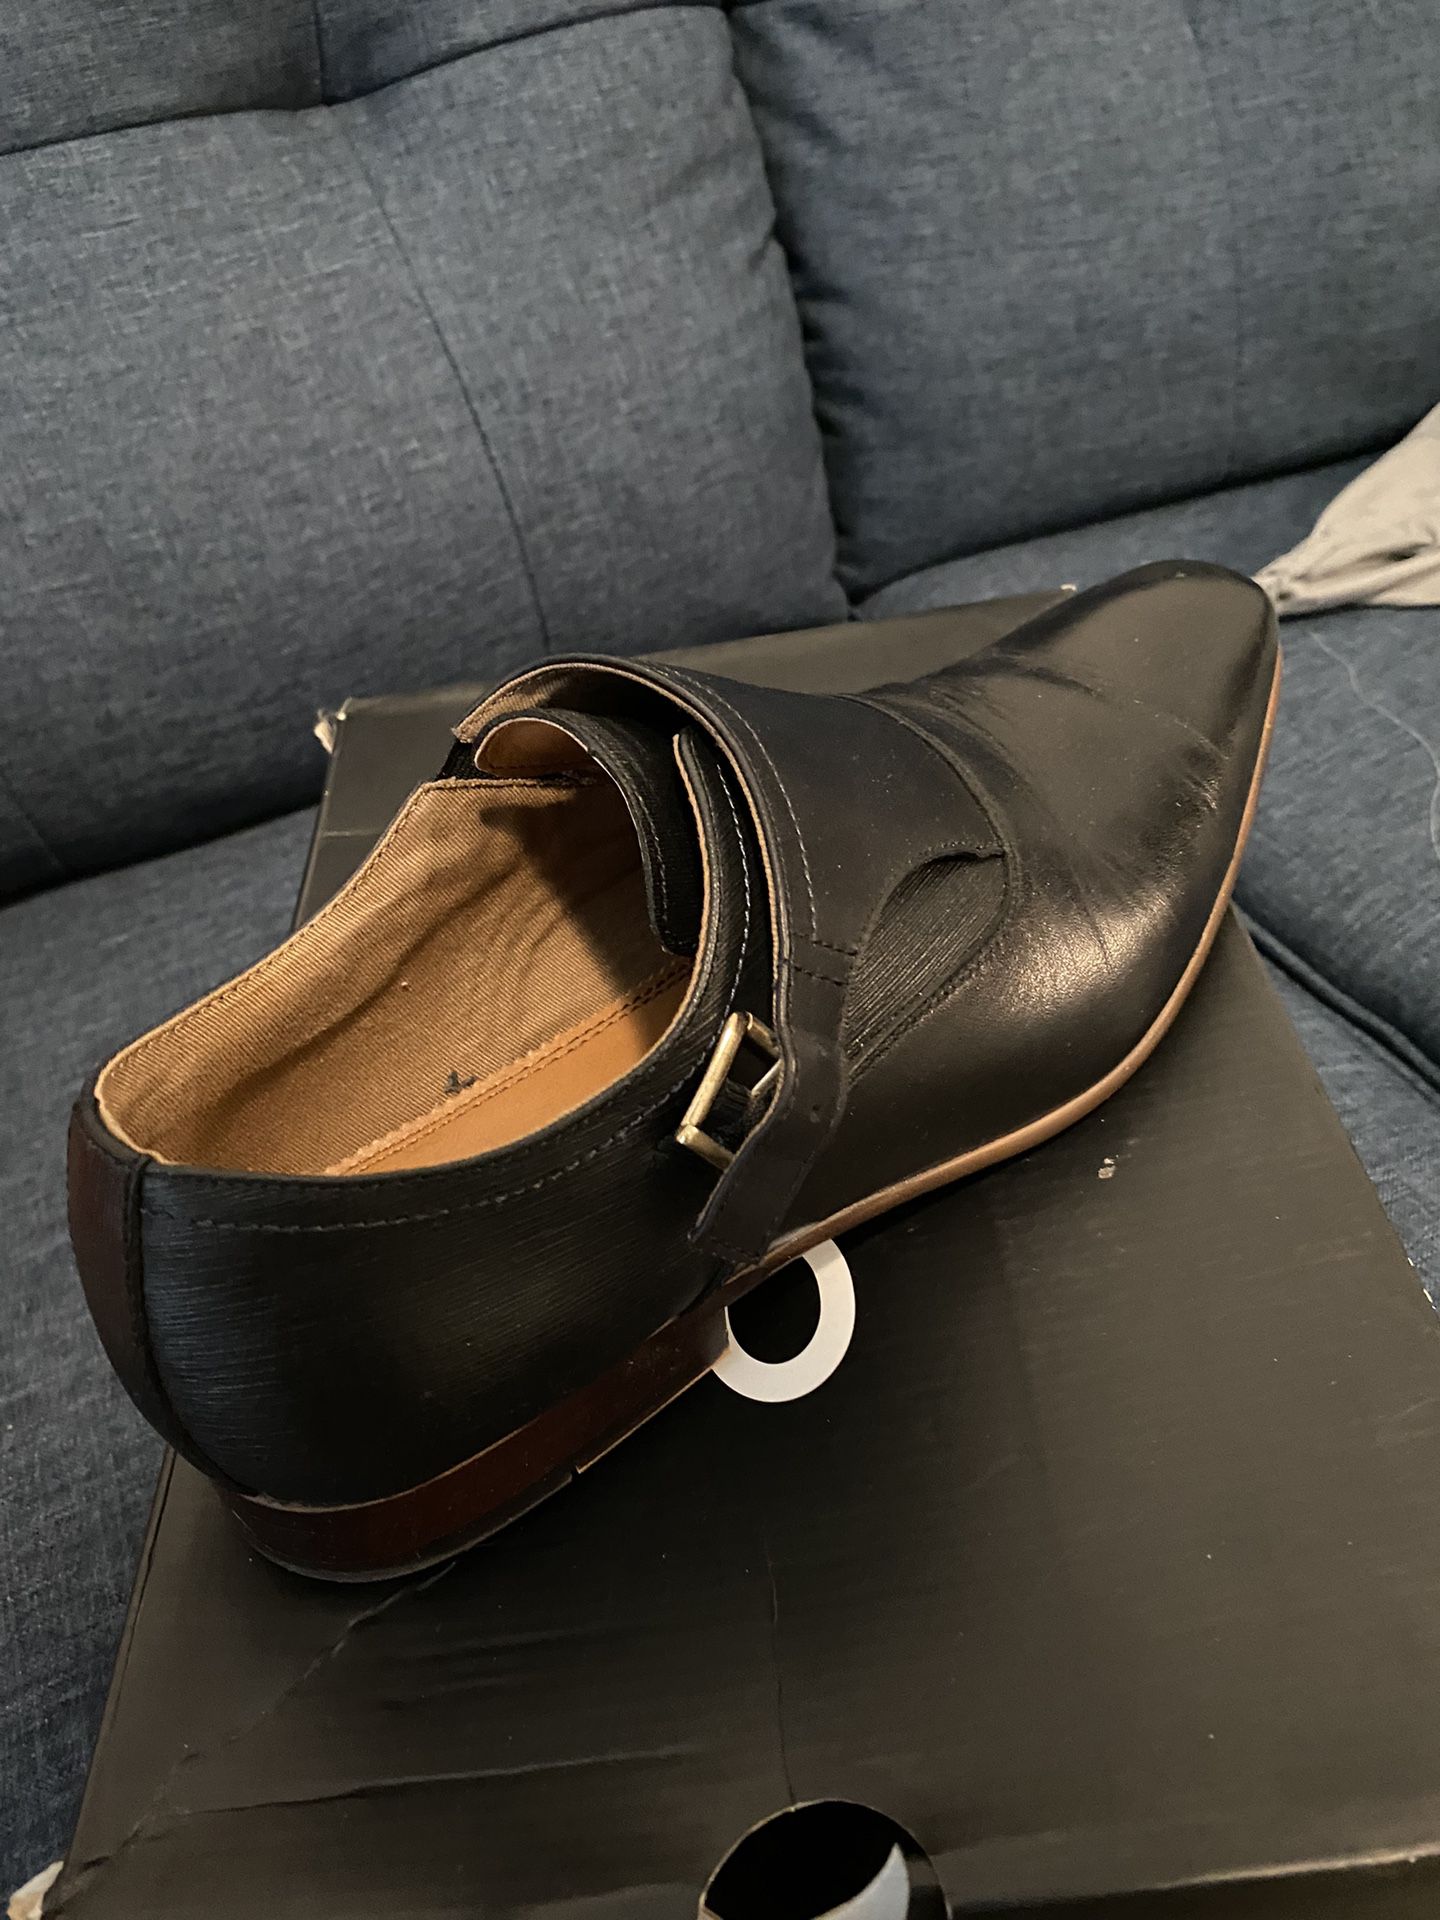 Aldo Black Dress Shoes 9.5 Men’s for Sale in Dallas, TX - OfferUp